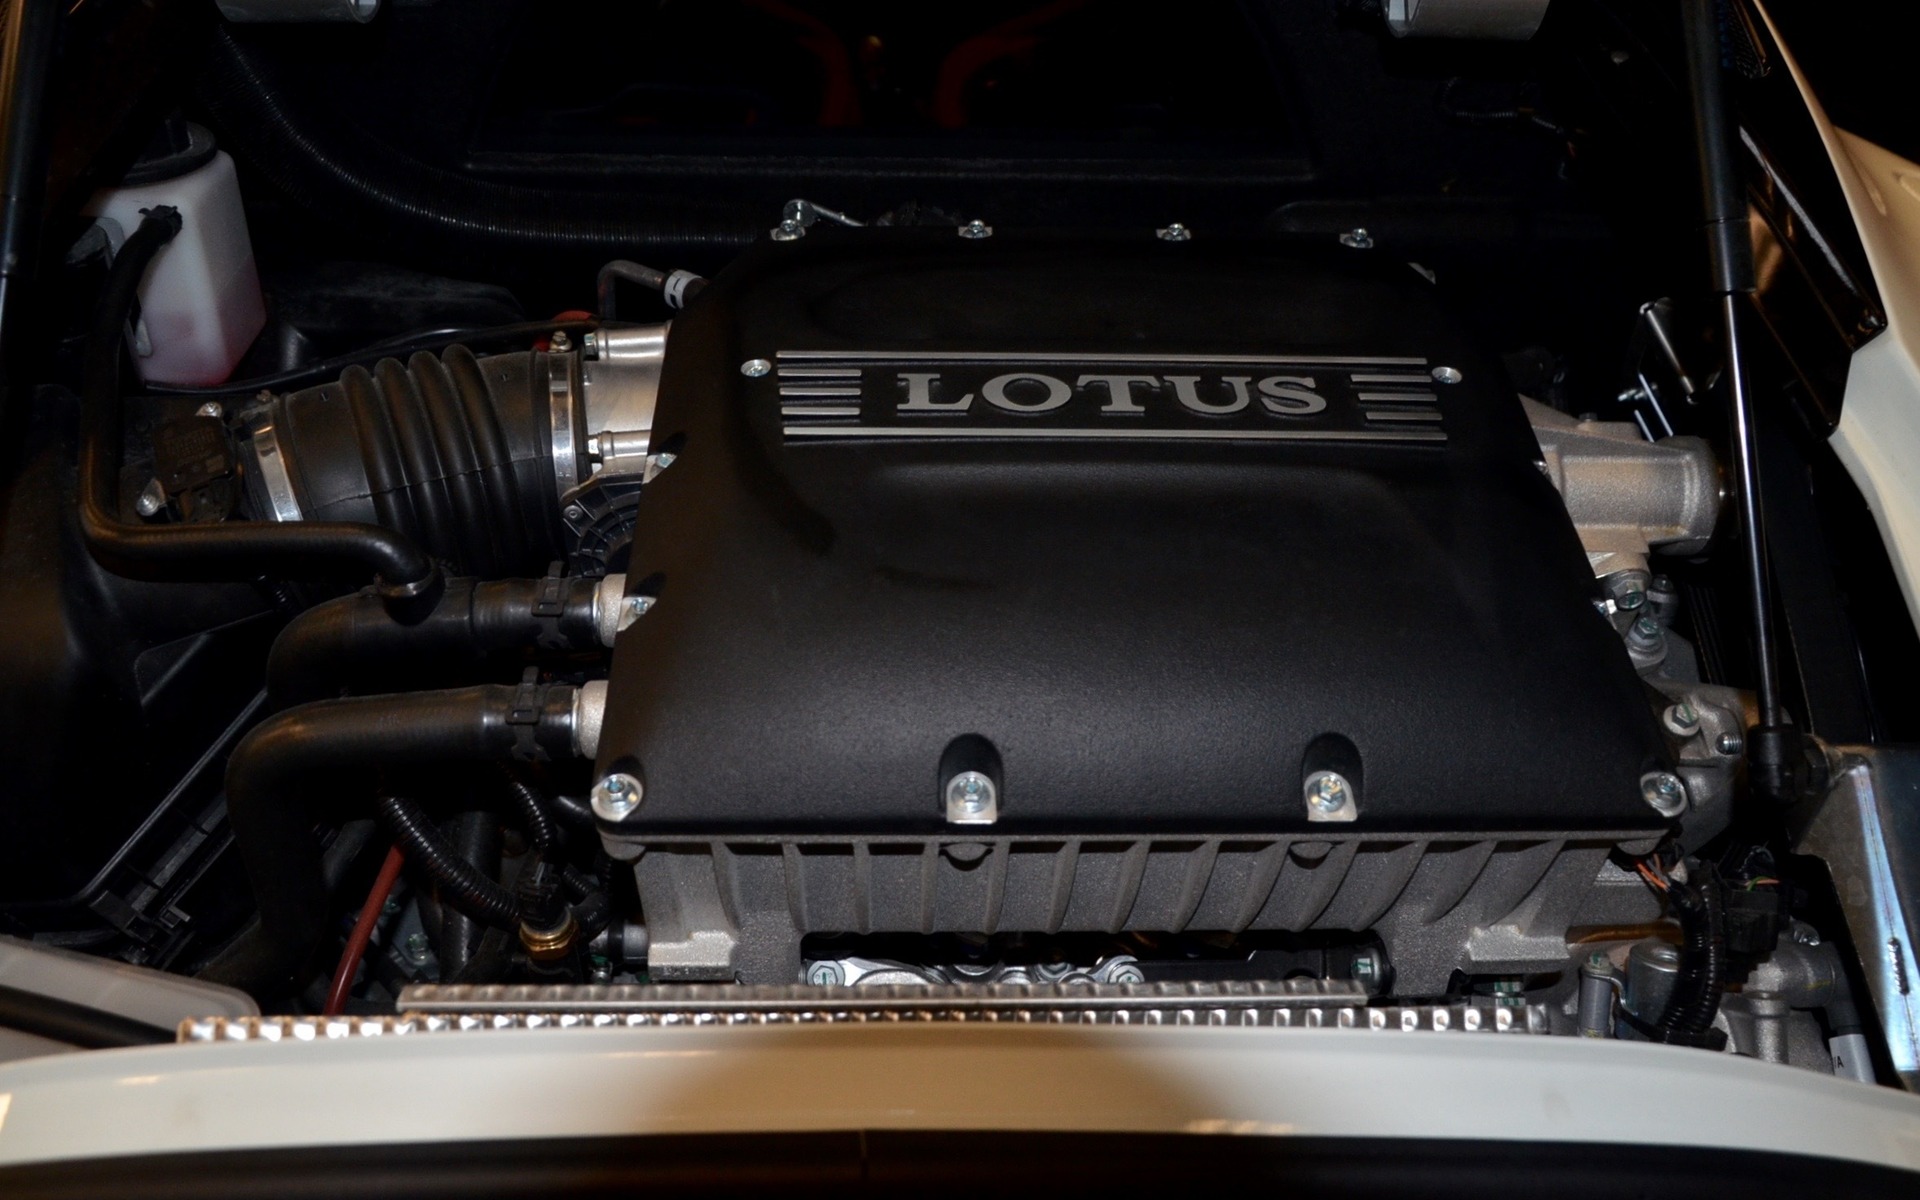 <p>Lotus Evora 400 engine</p>